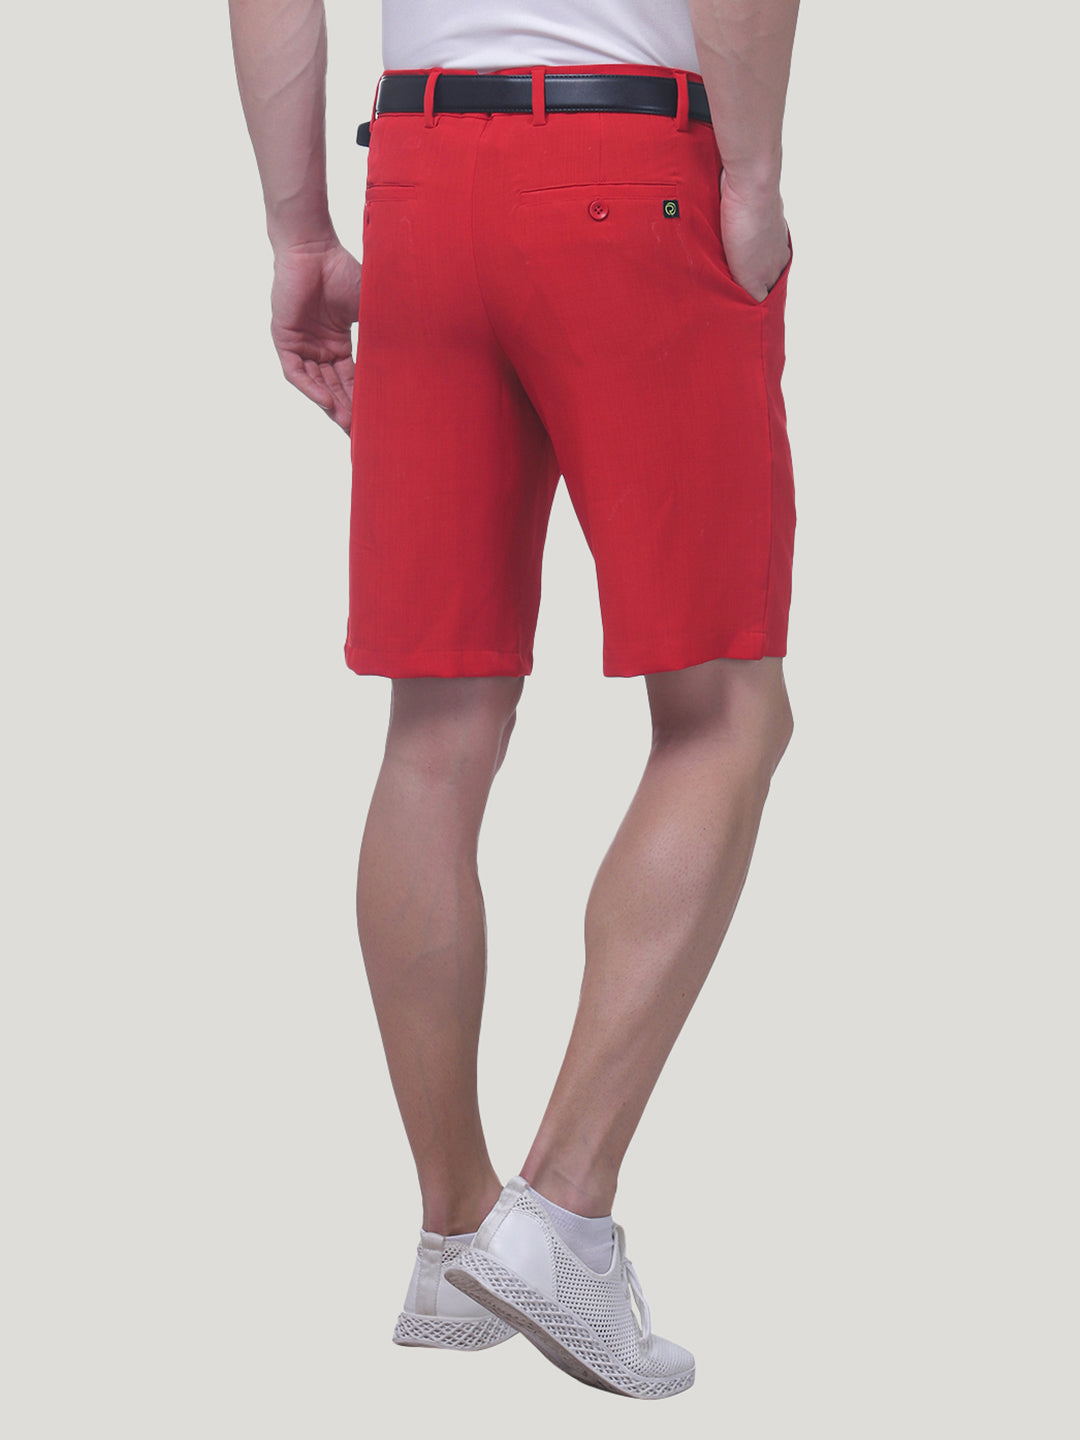 Men's stretchy dryfit light weight golf shorts